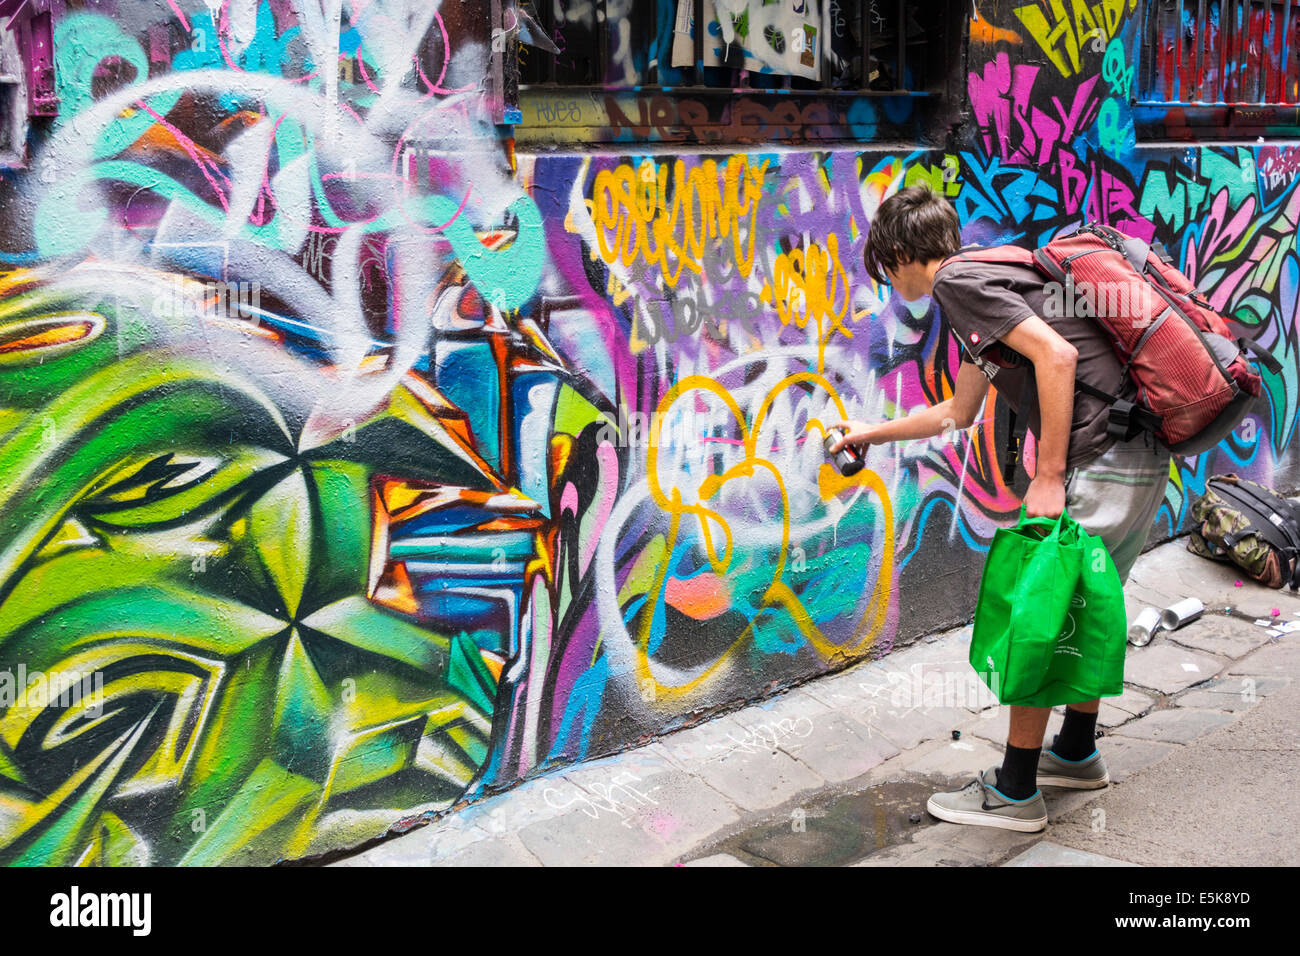 Melbourne Australia,Hosier Lane,arte urbana di strada,murales,graffiti,teen teen teen ager ragazzi,maschio bambini bambini bambini ragazzi giovani Foto Stock